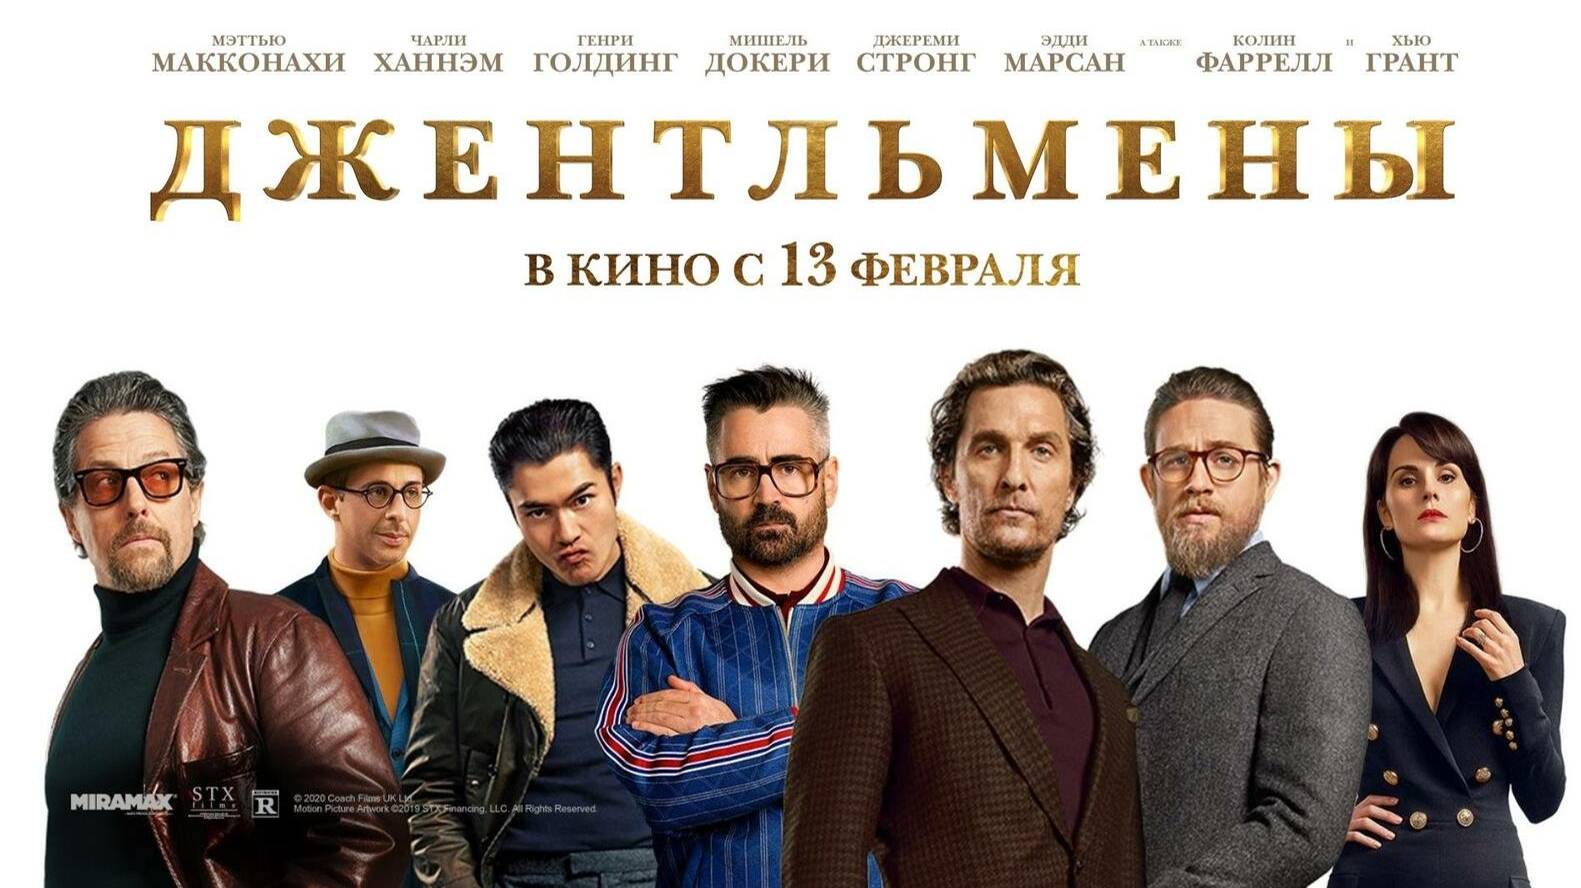 Джентльмены-Русский трейлер 2020